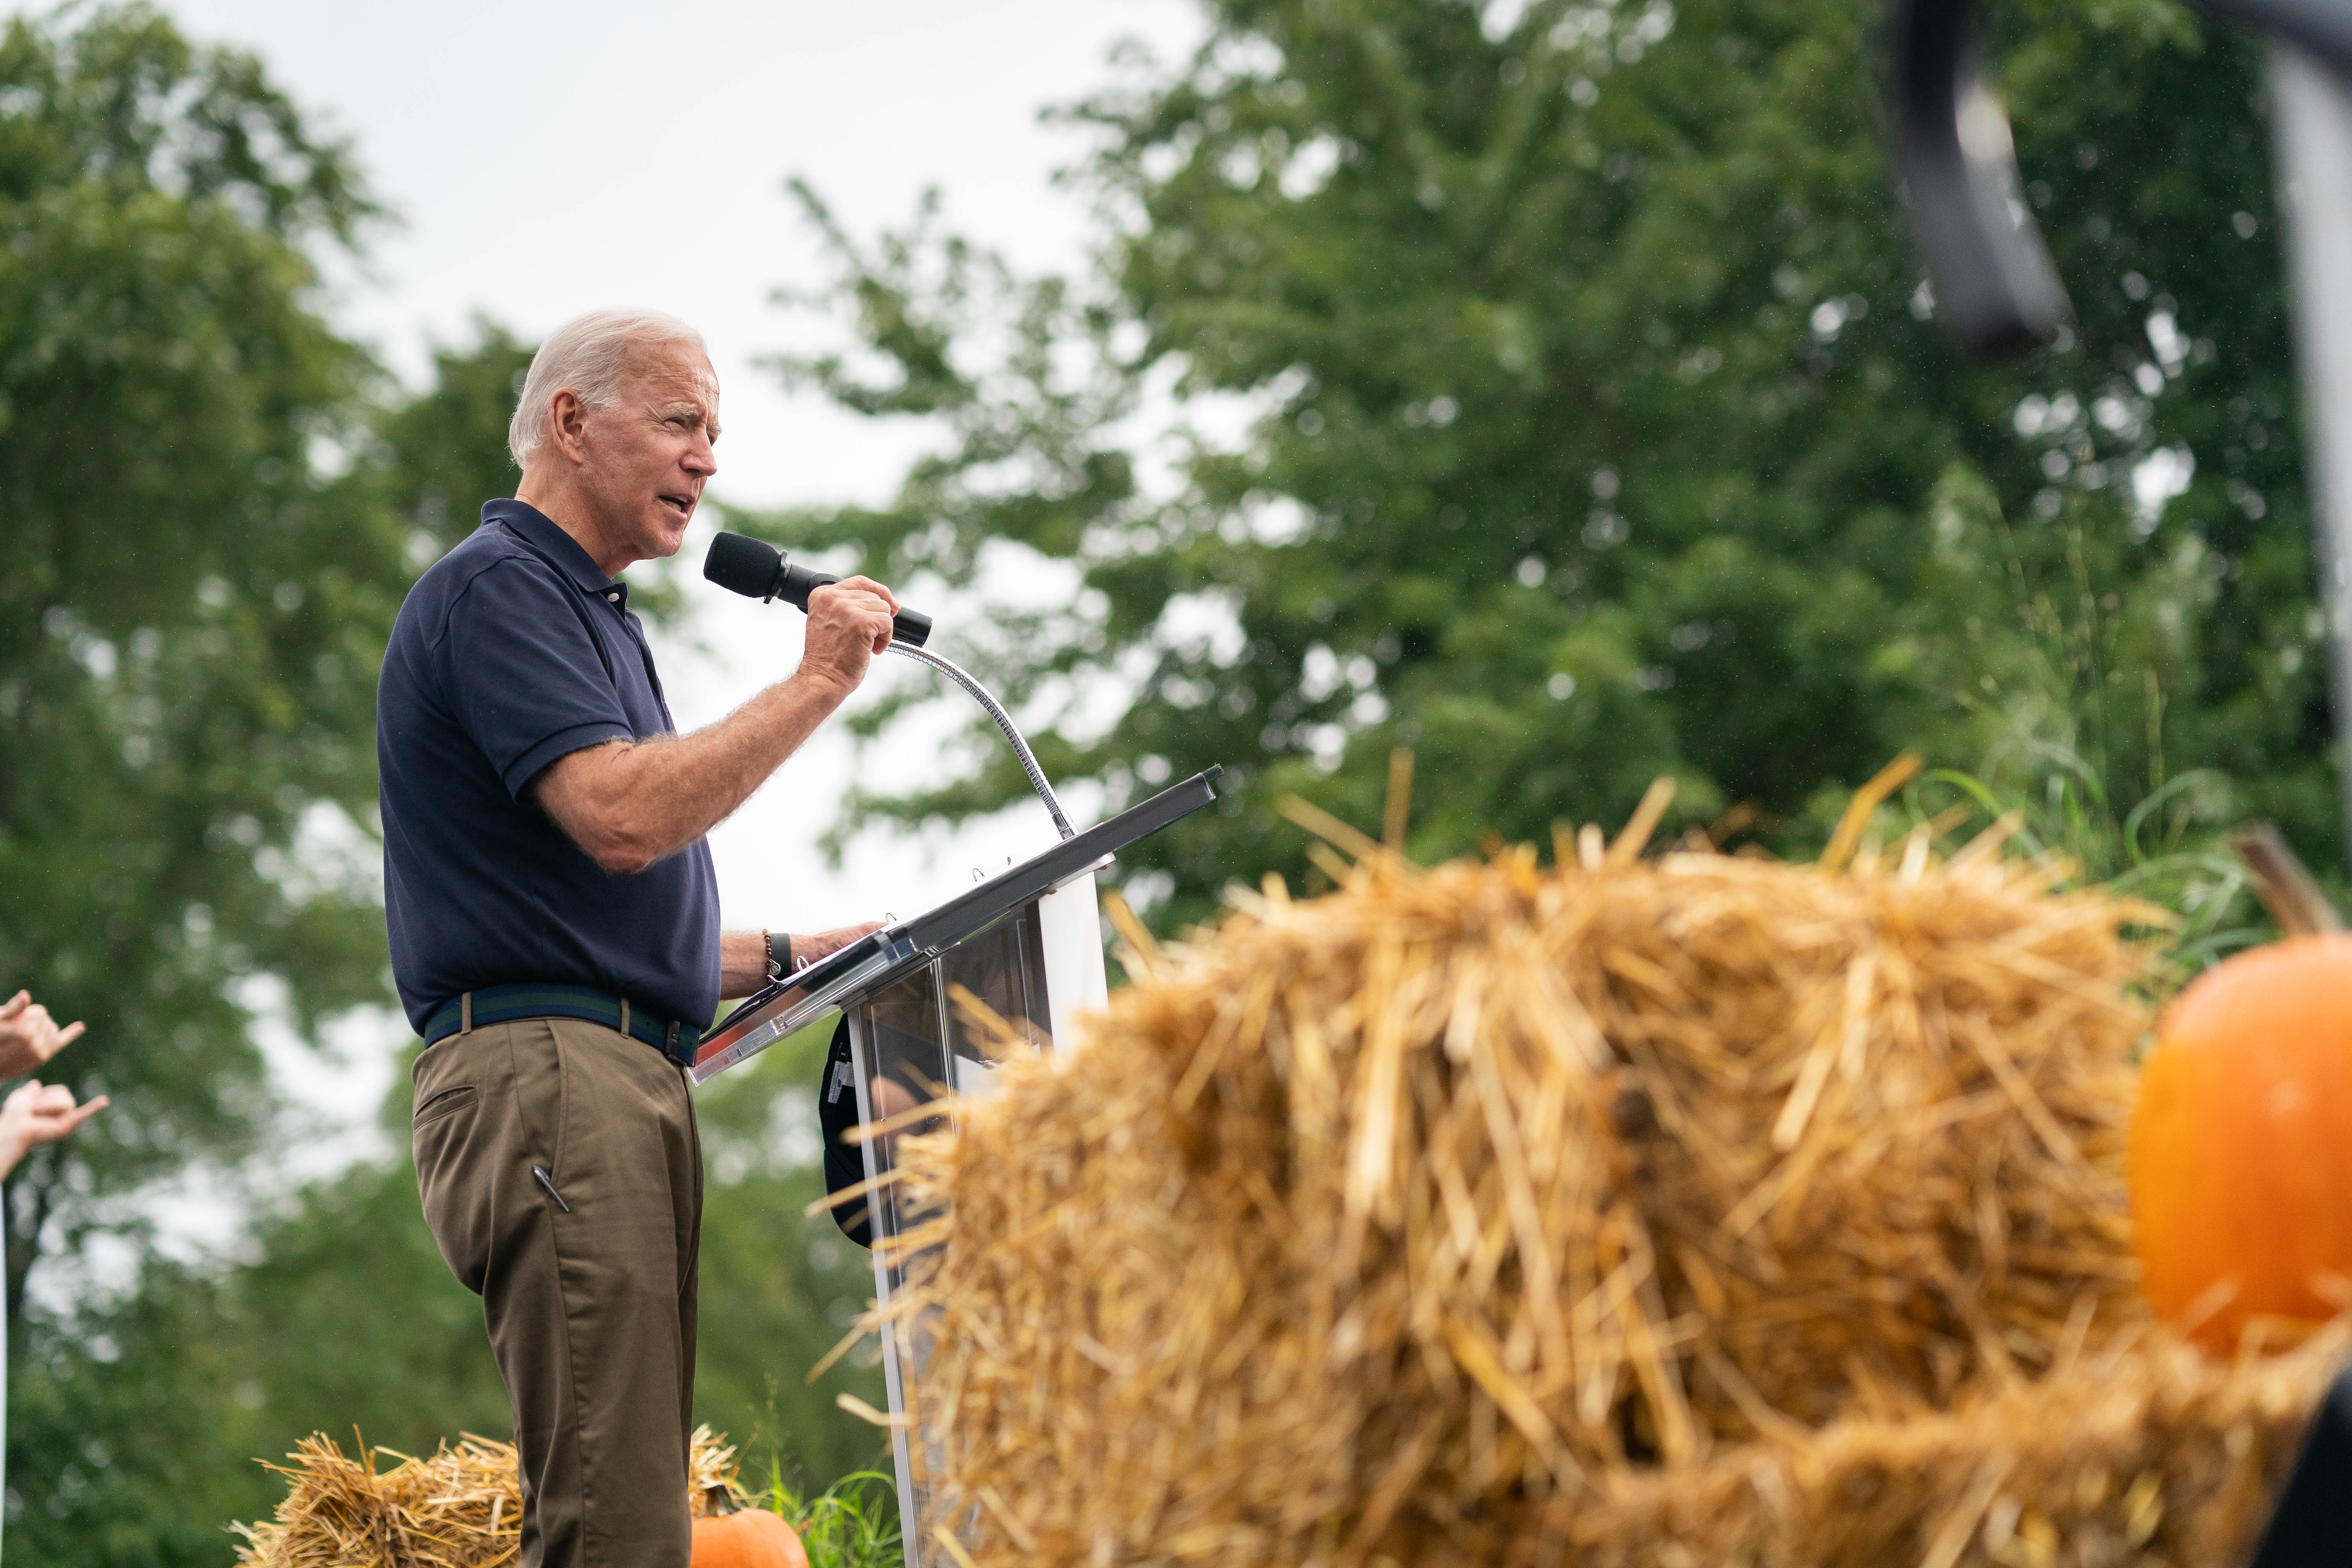 Biden Must Prioritize Rural Development To Help Rebuild The Heartland